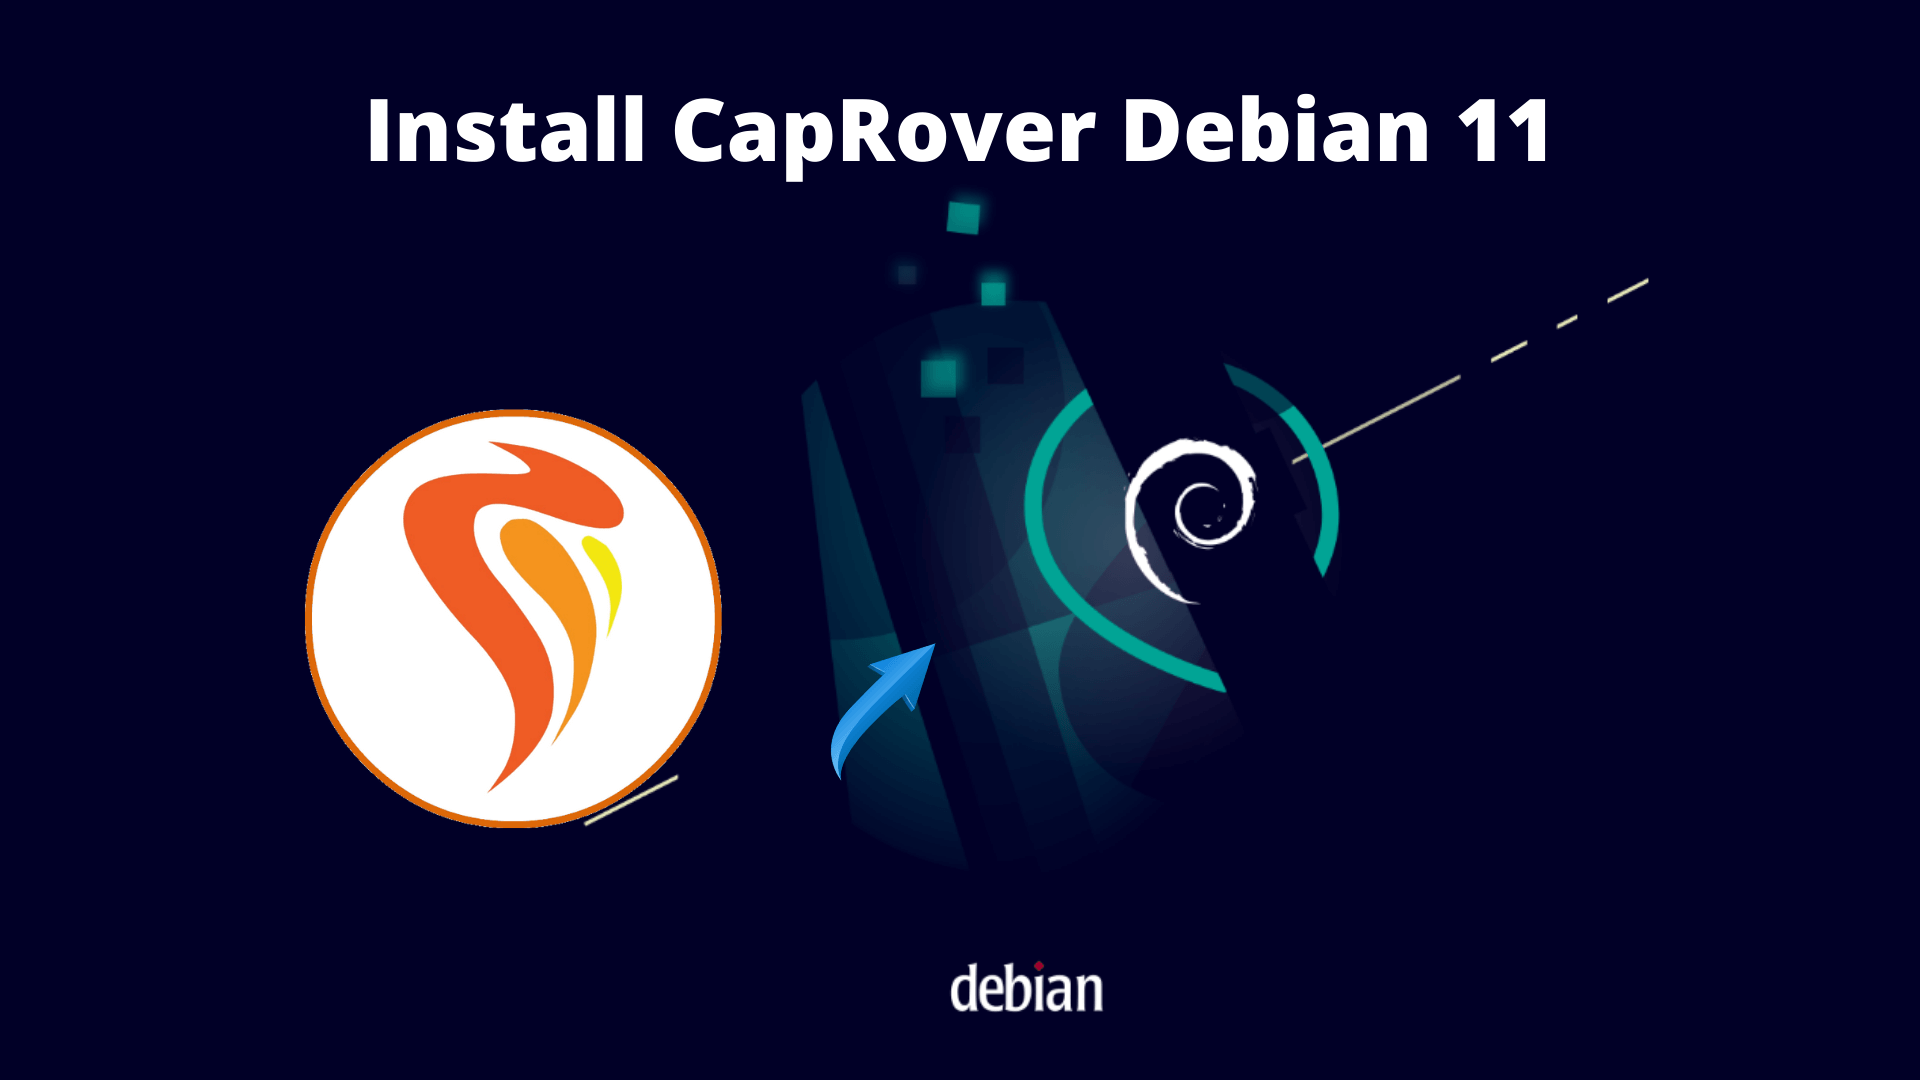 Install CapRover on Debian 11